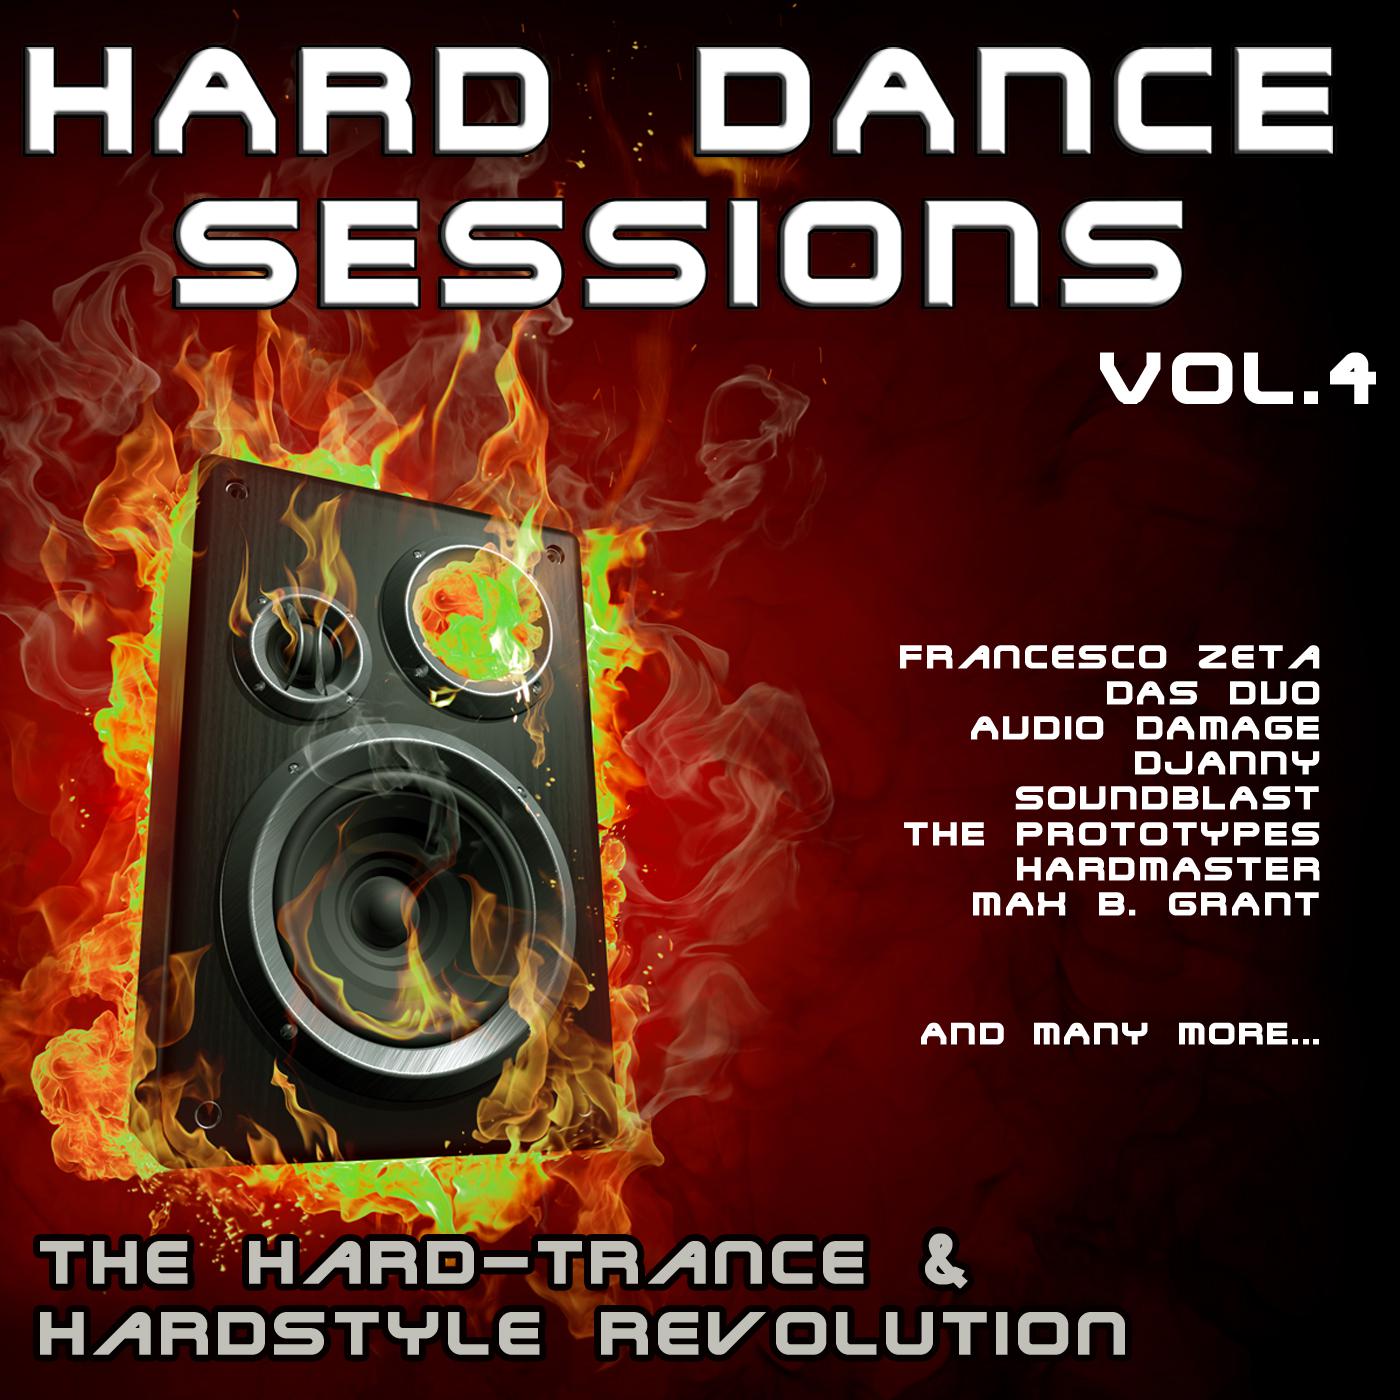 Hard Dance Sessions, Vol. 4 - The Hard-Trance & Hardstyle Revolution